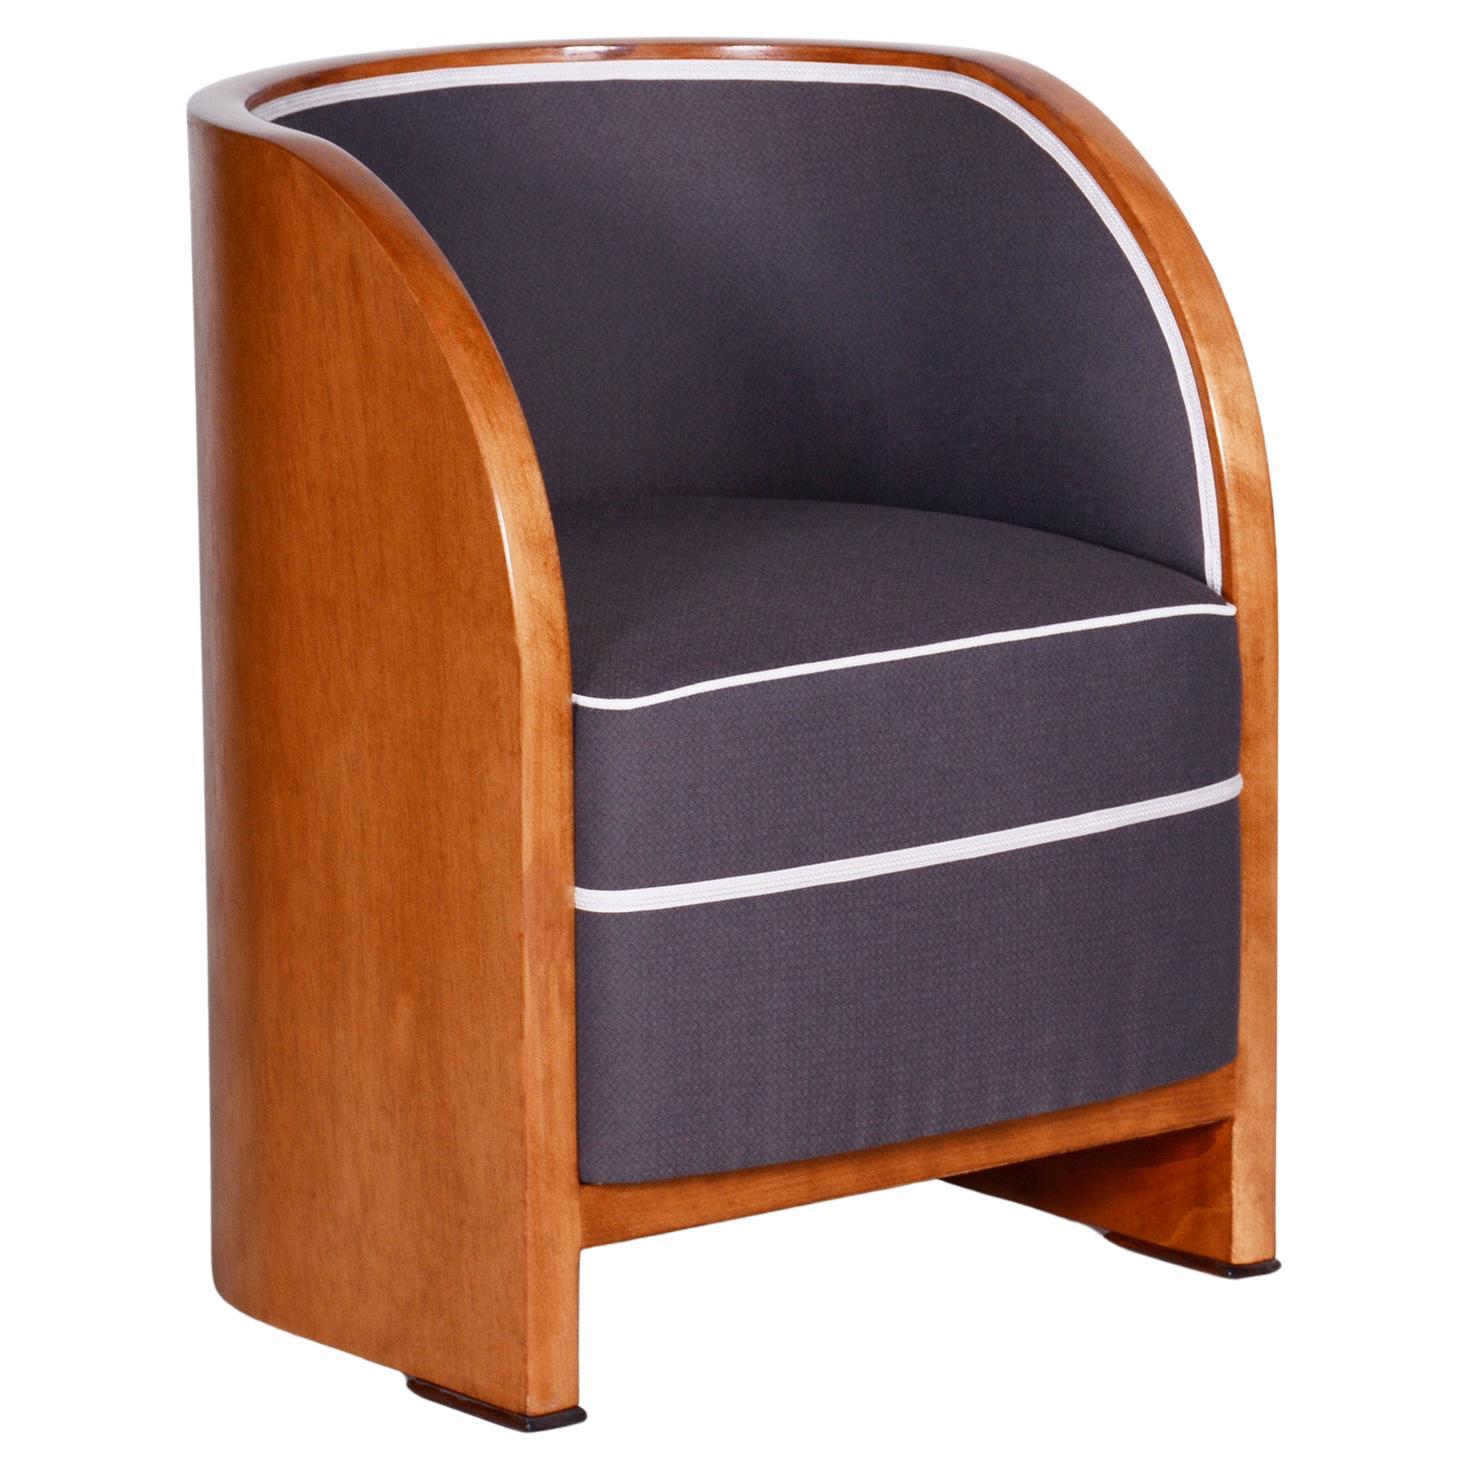 Restored Art Deco Armchair, Mahogany Veneer, Beech Solid Wood, France, 1940s